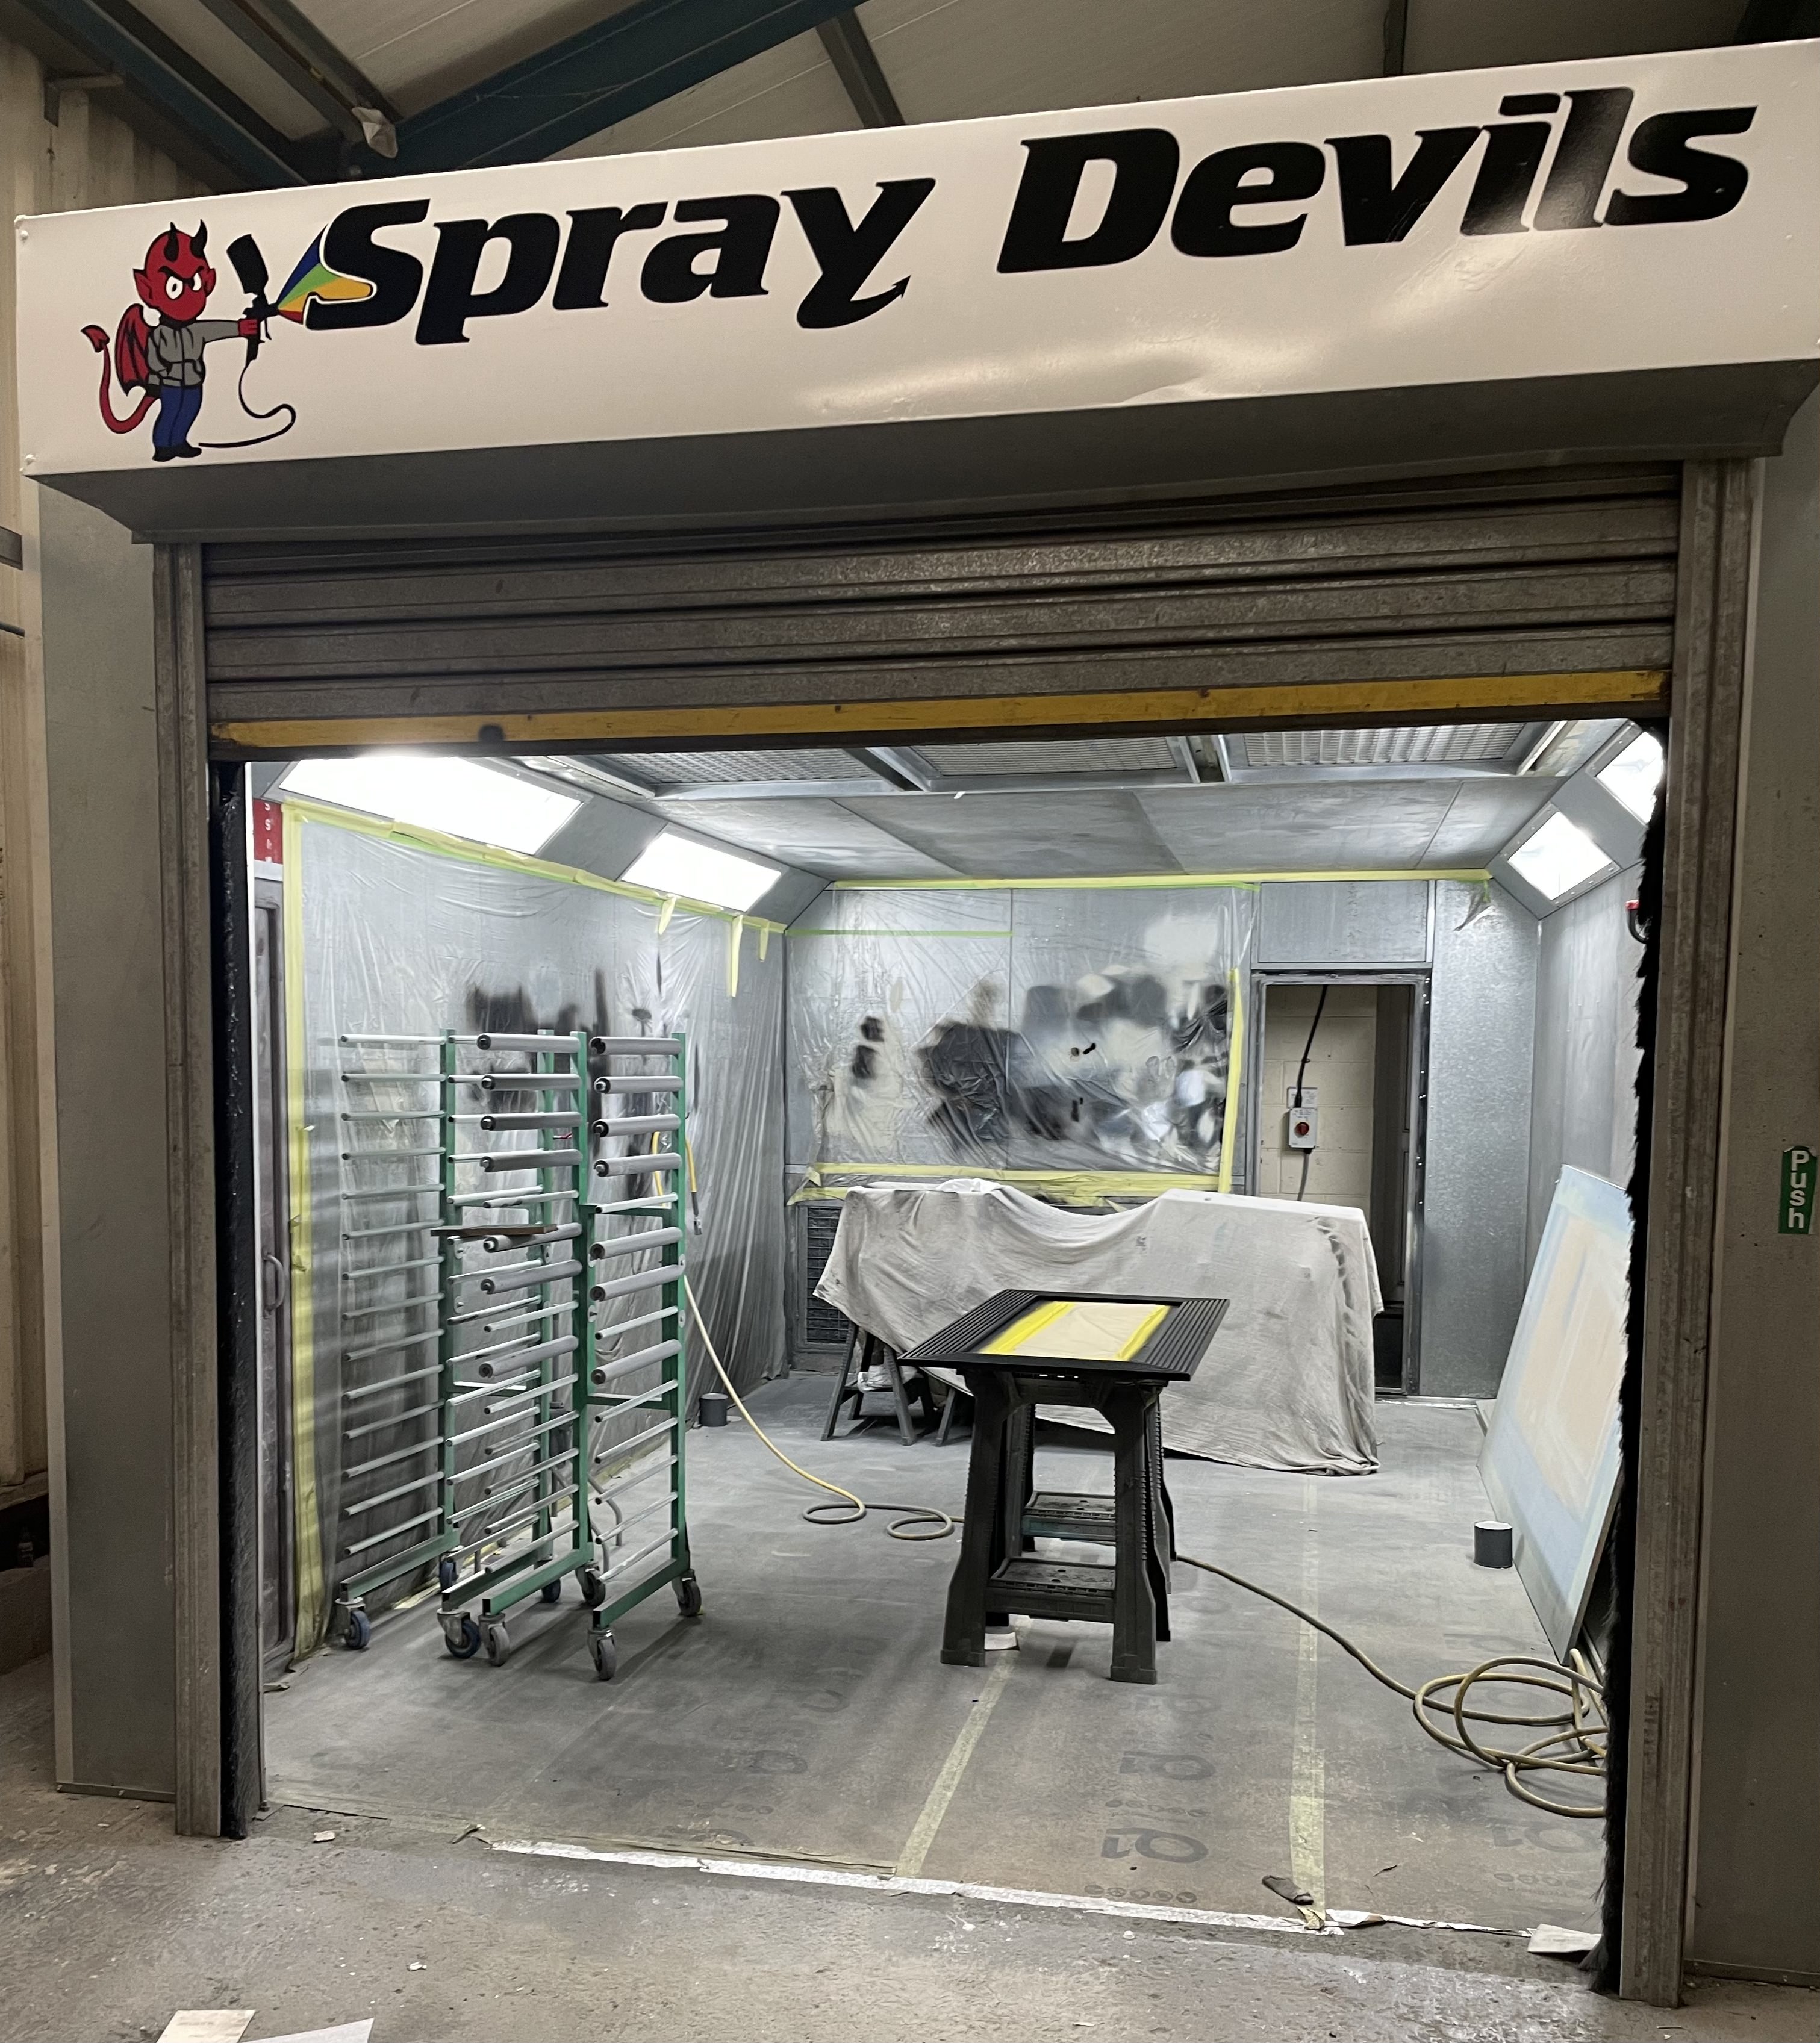 Spray booth